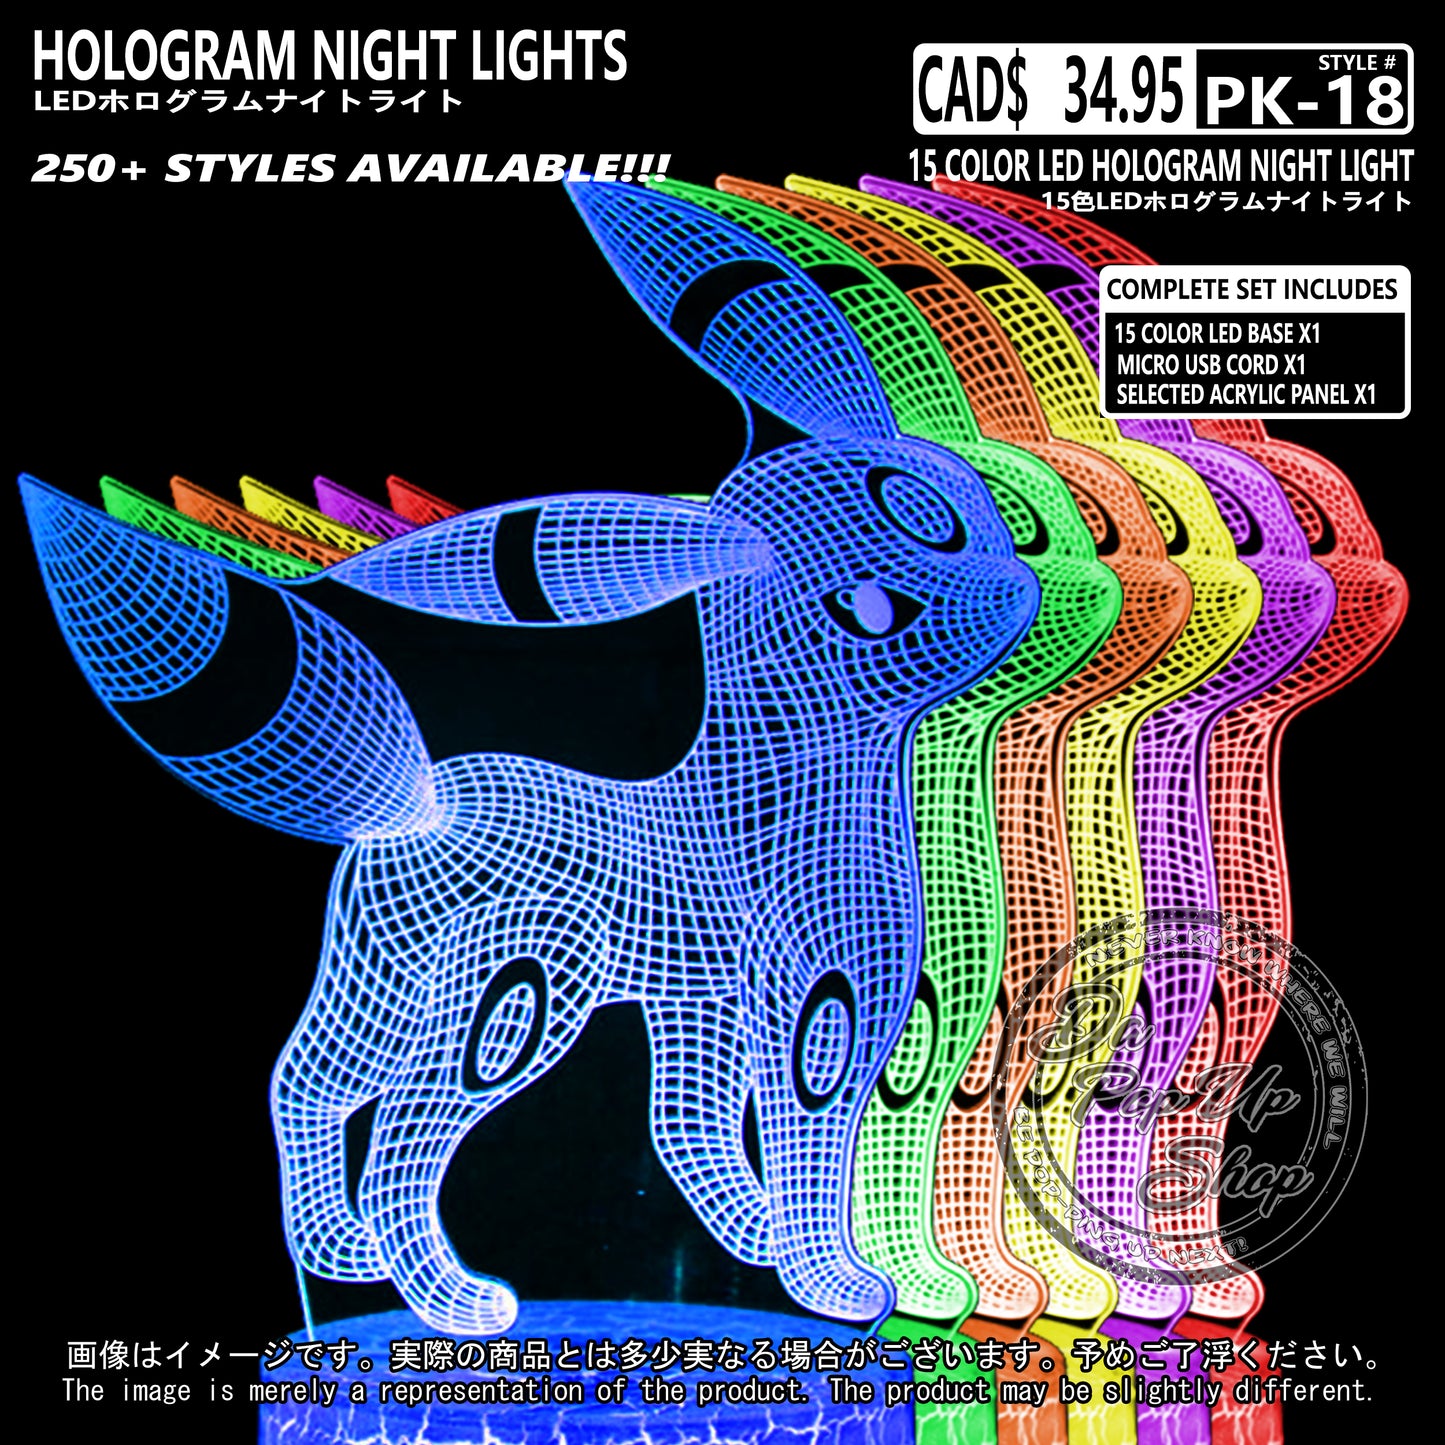 (PKM-18) UMBREON Pokemon Hologram LED Night Light